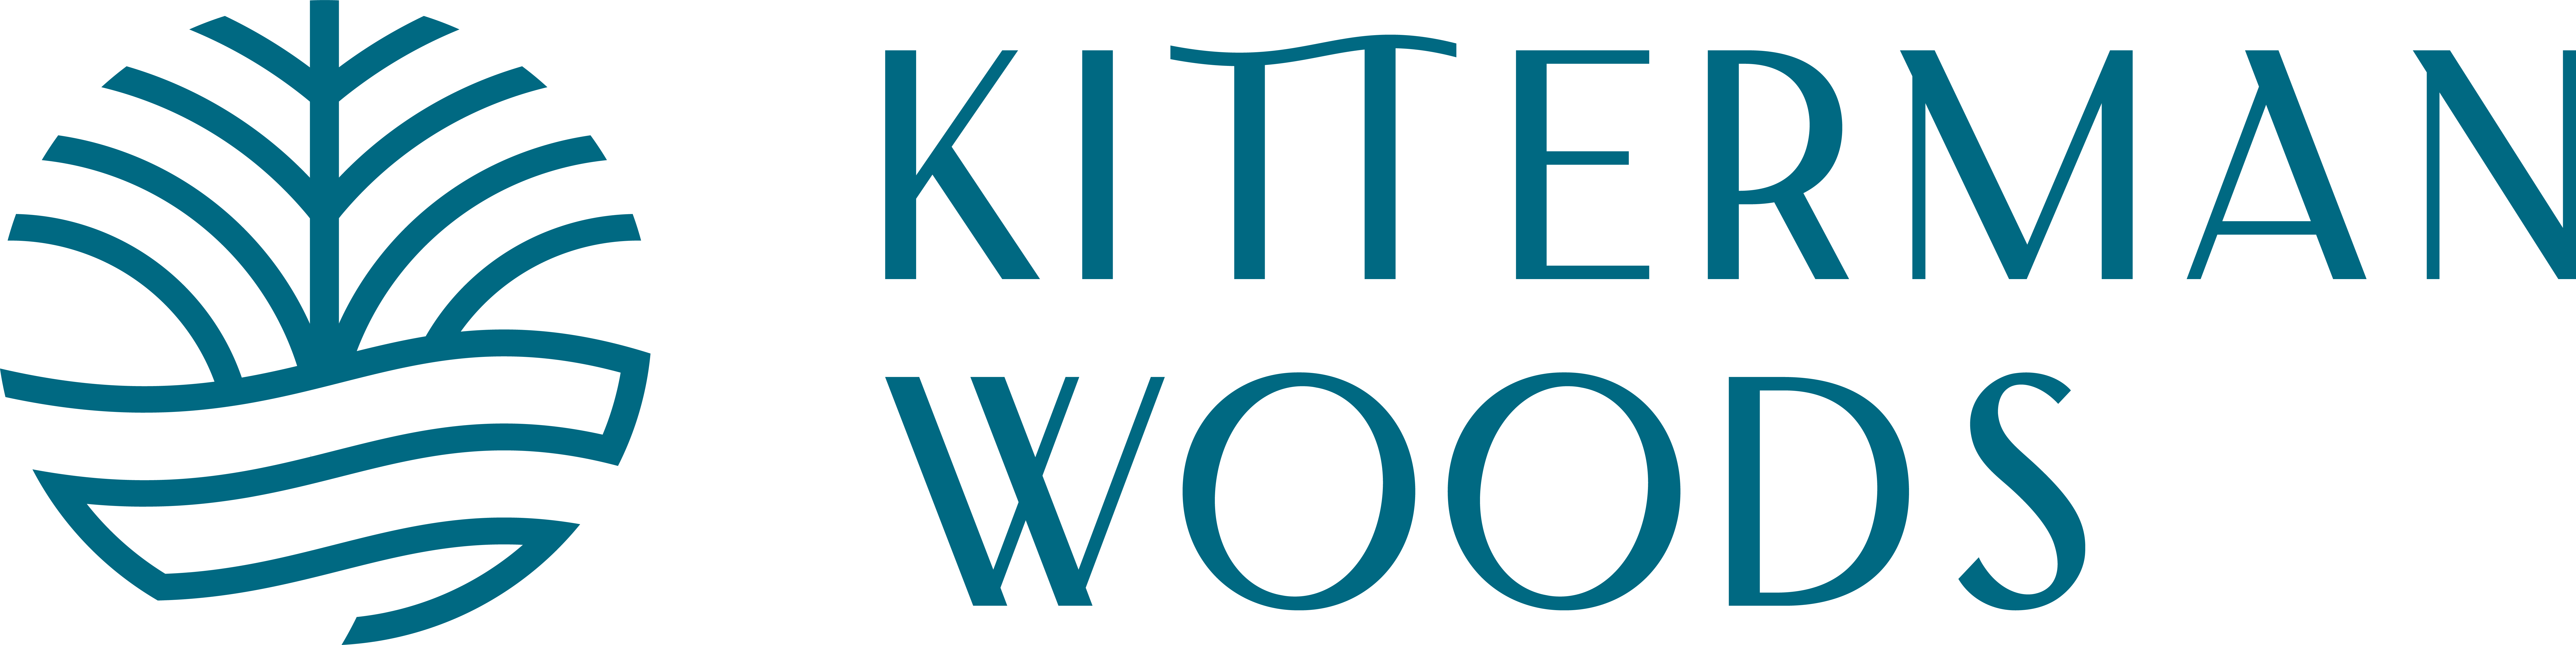 Kitterman Woods